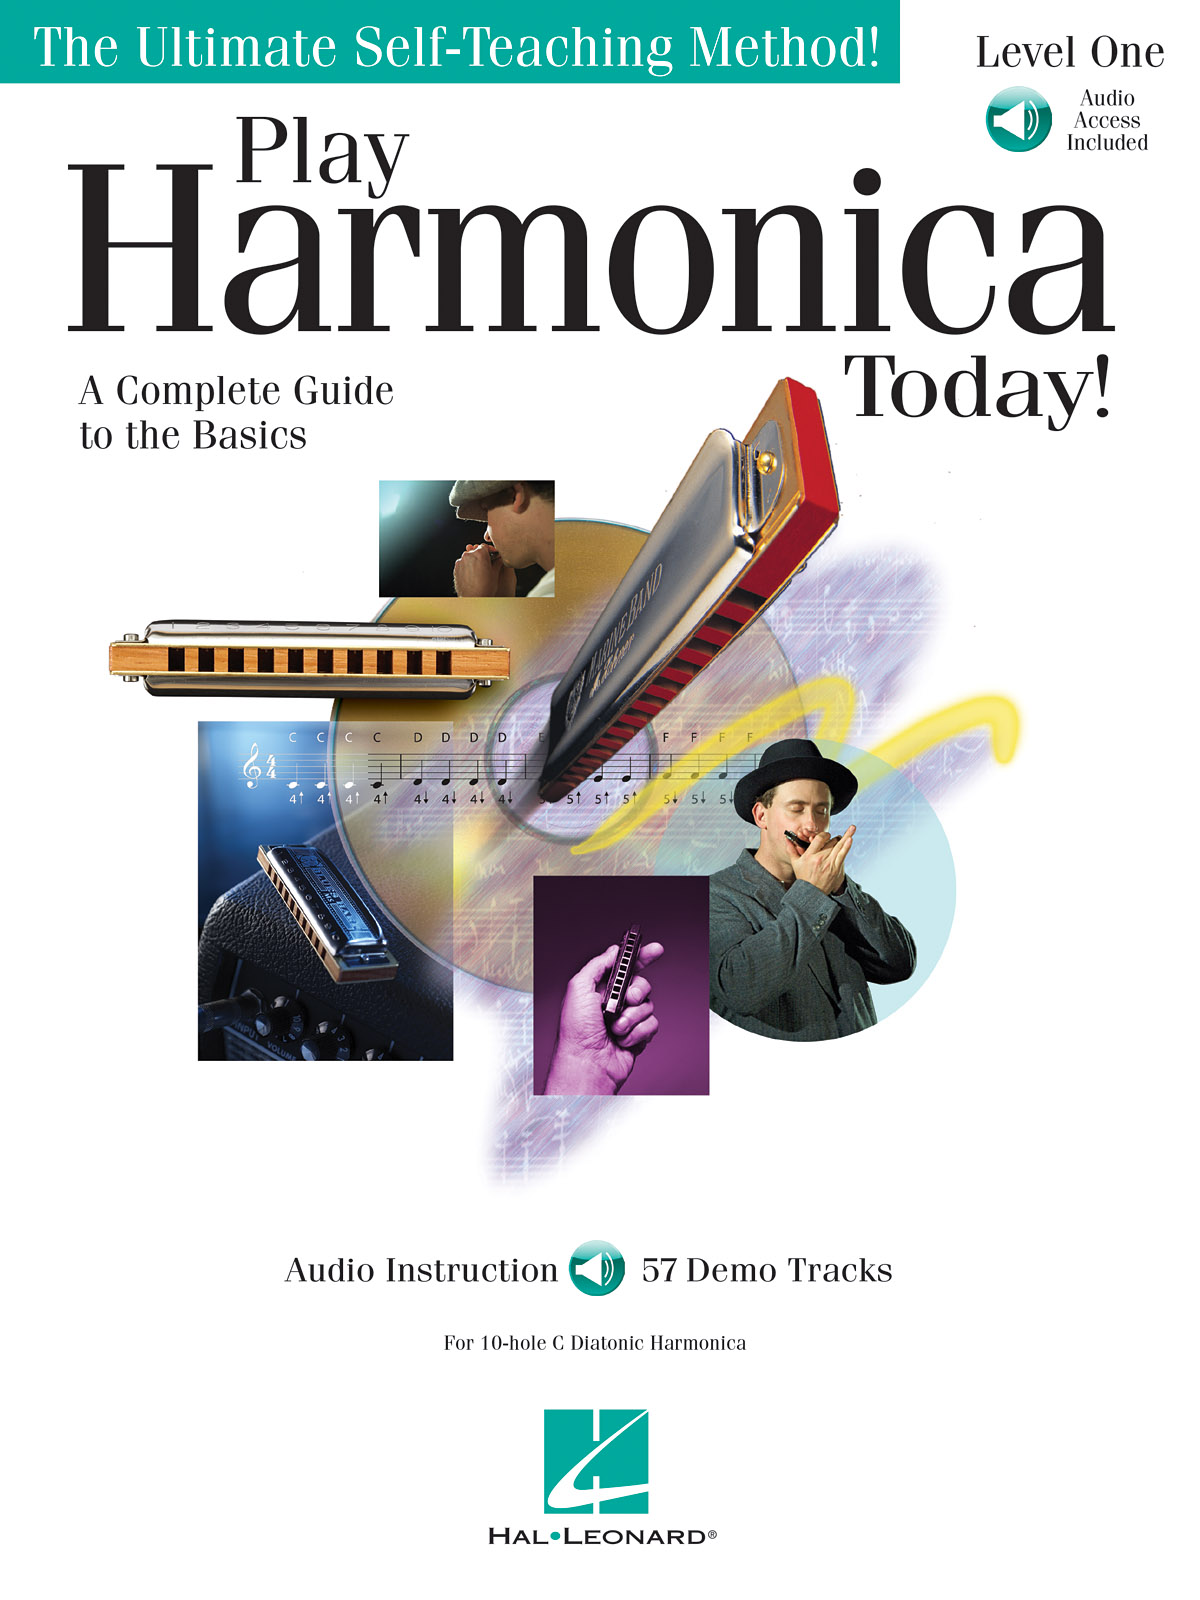 Play Harmonica Today! Level 1 - noty na foukací harmoniku